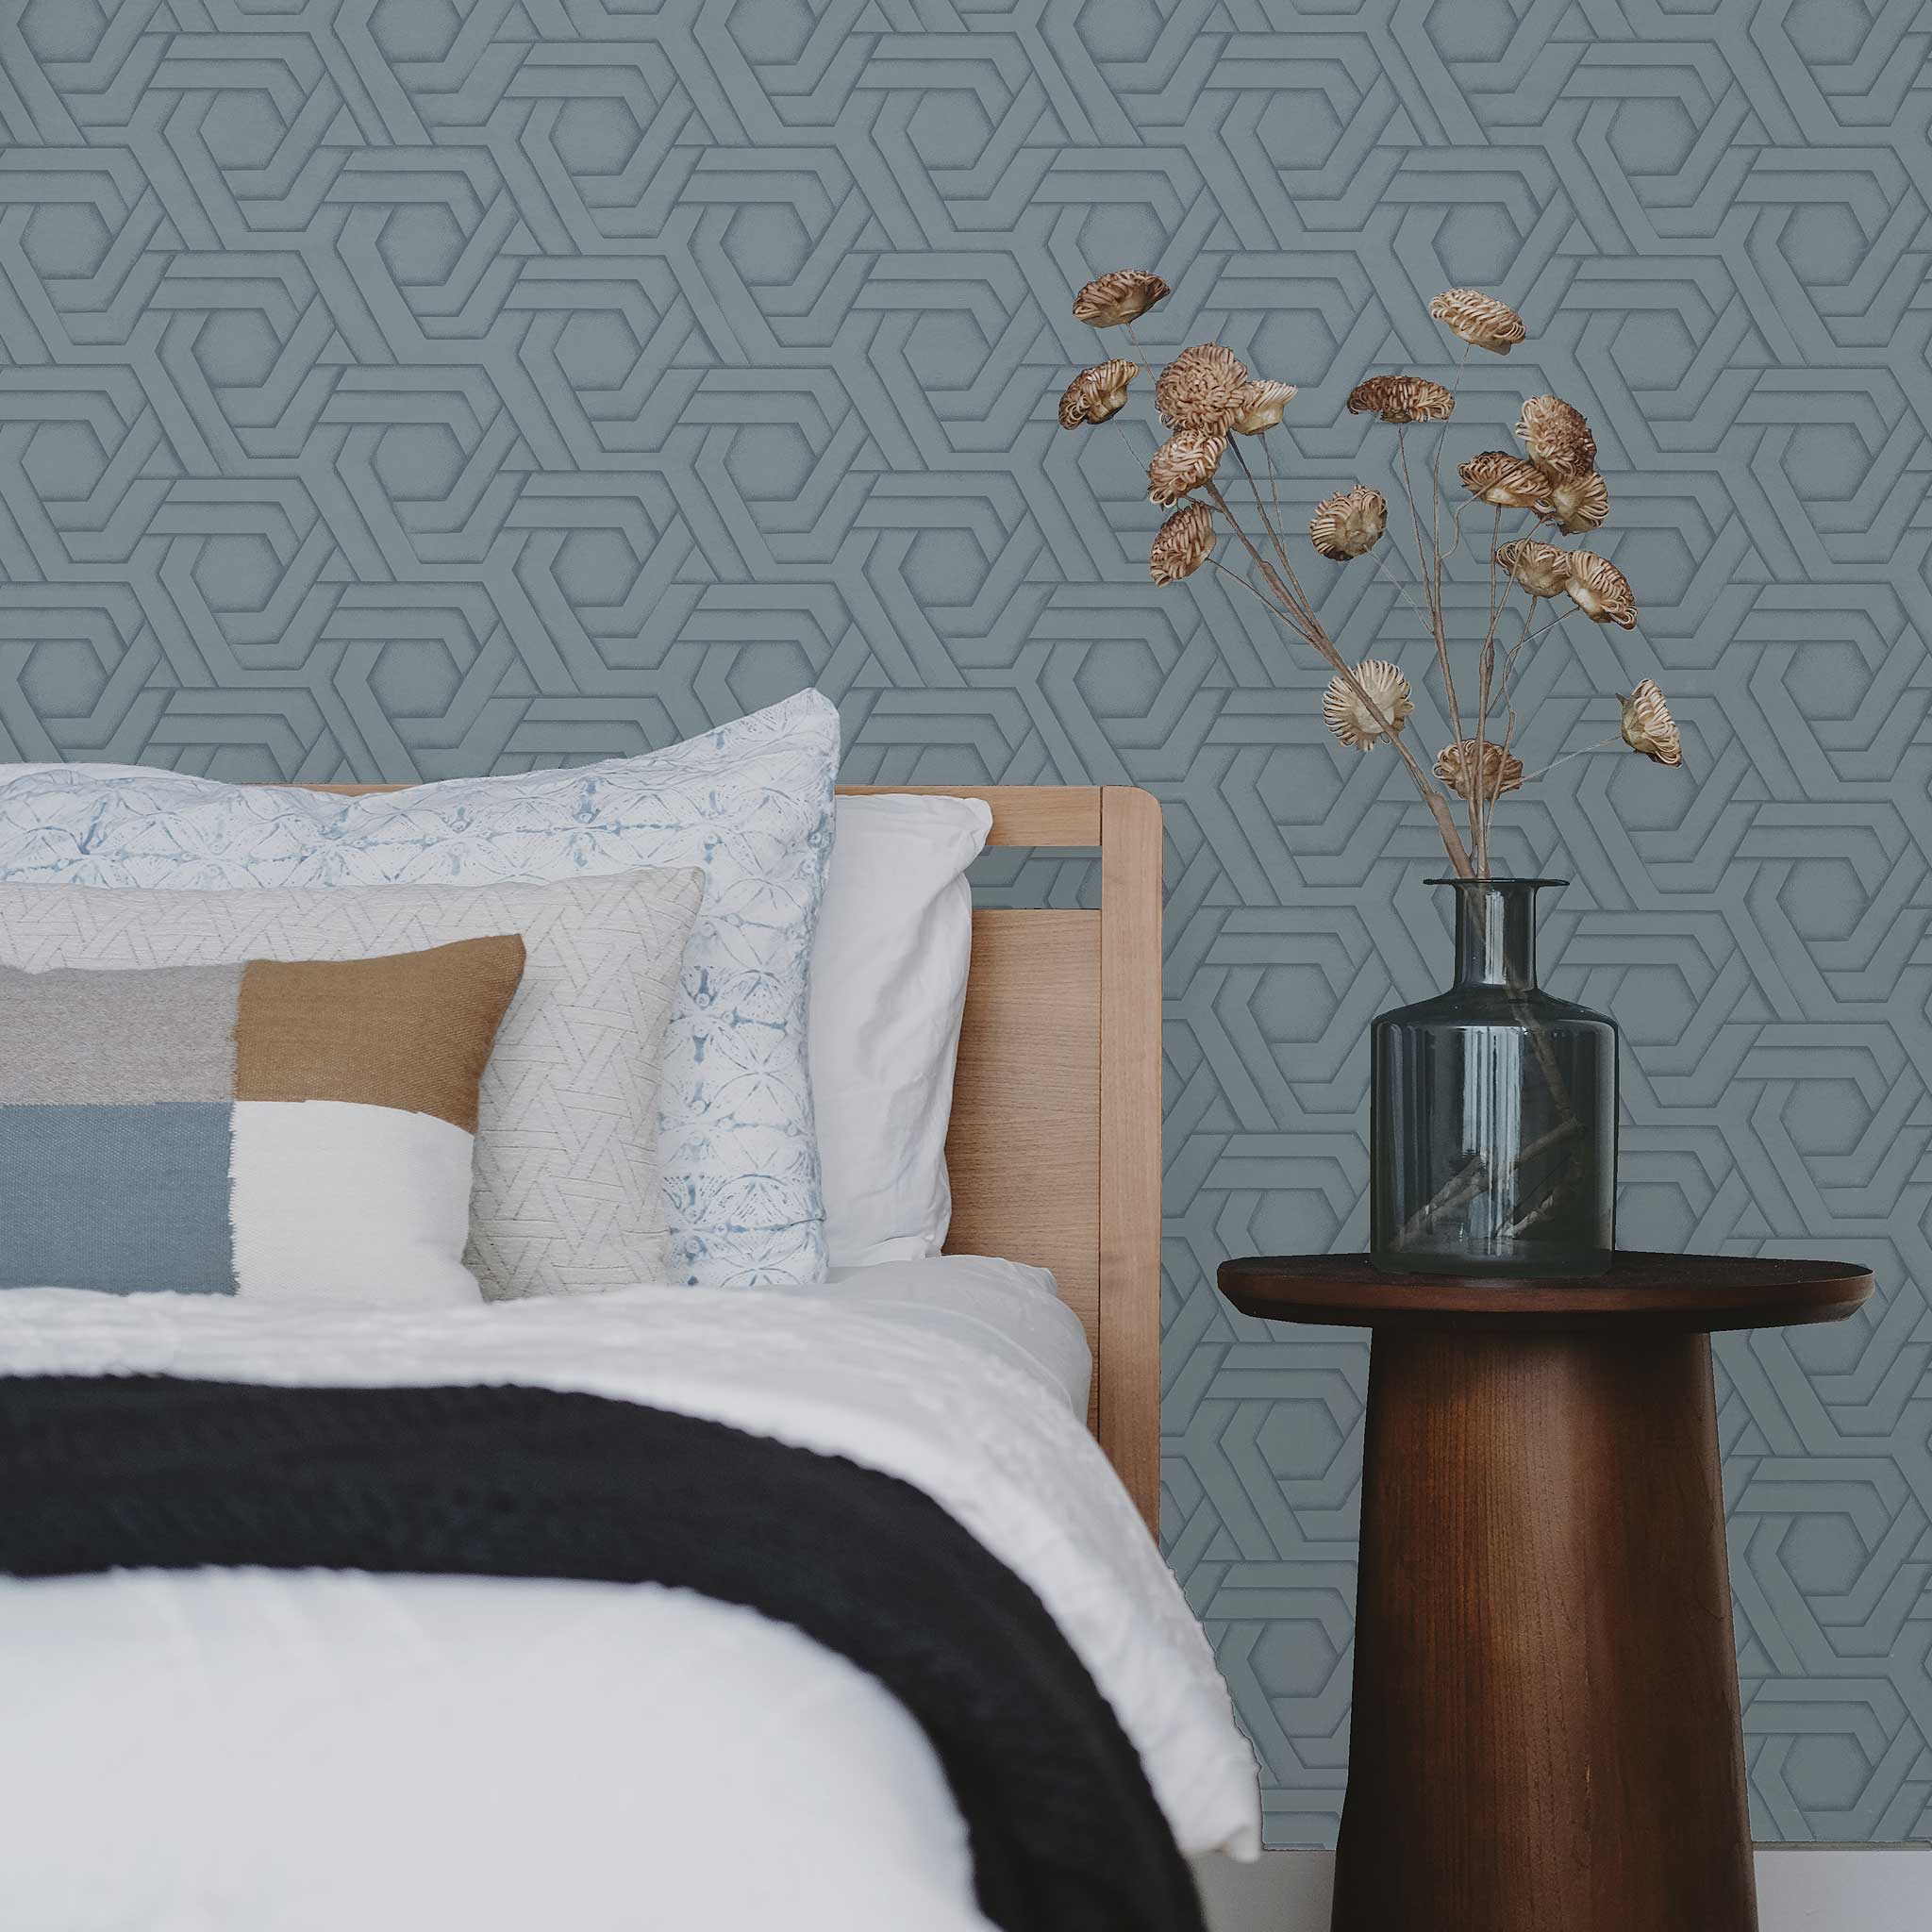 Habita wallpaper design - blue Hix pattern in bedroom